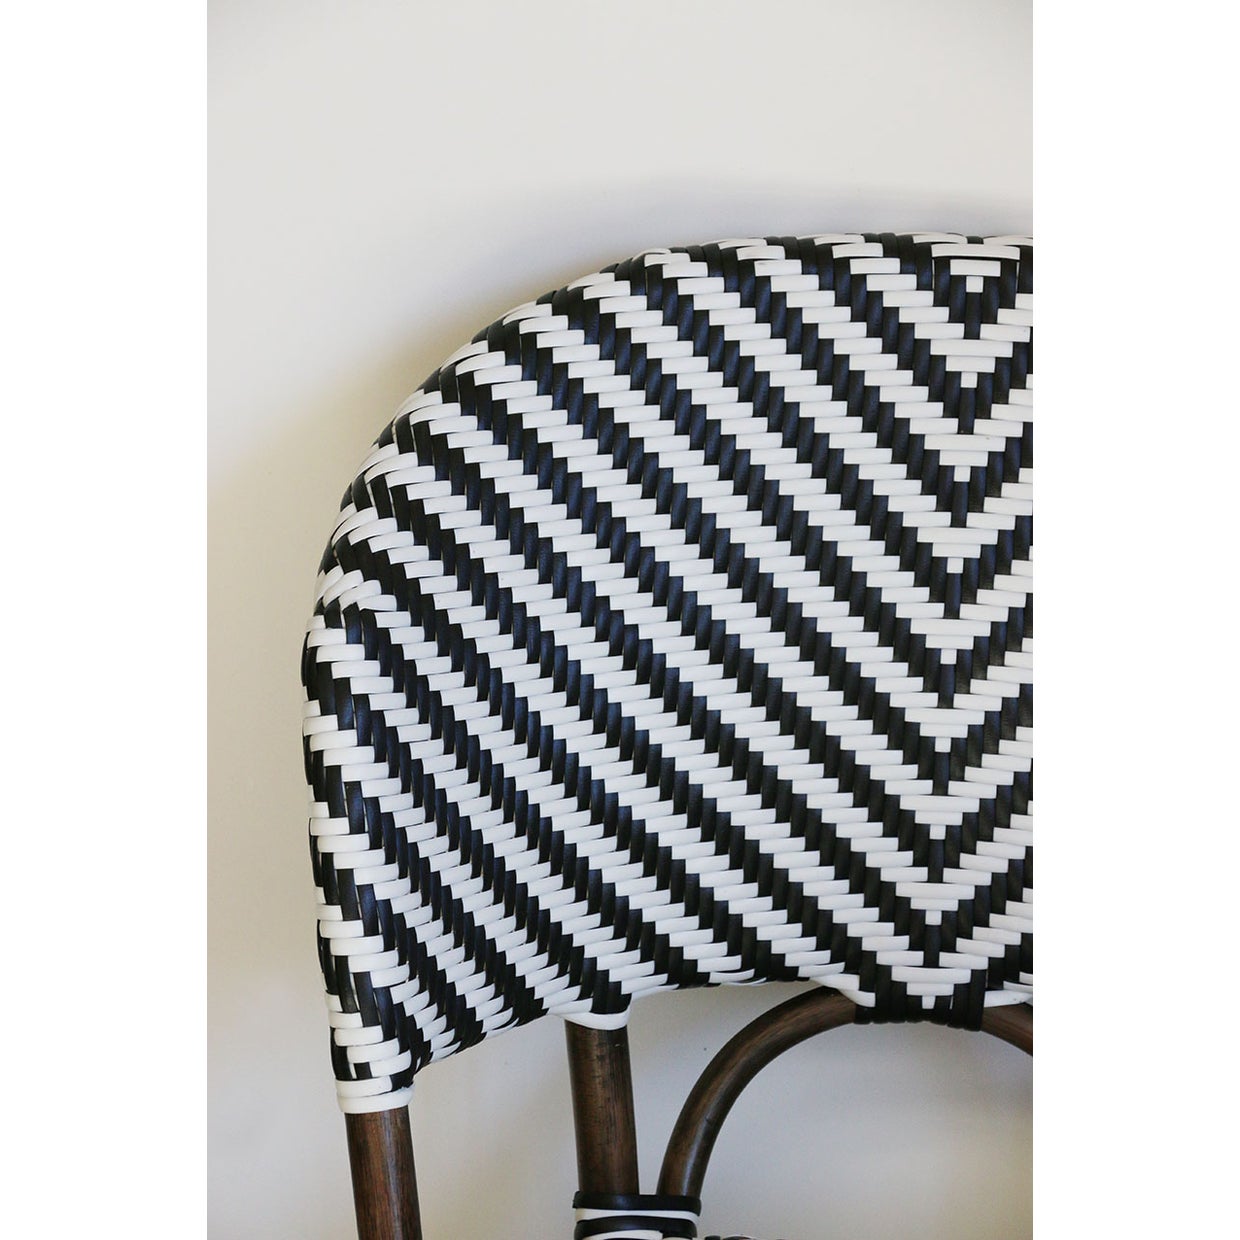 Bermuda Black & White Woven Rattan Chair